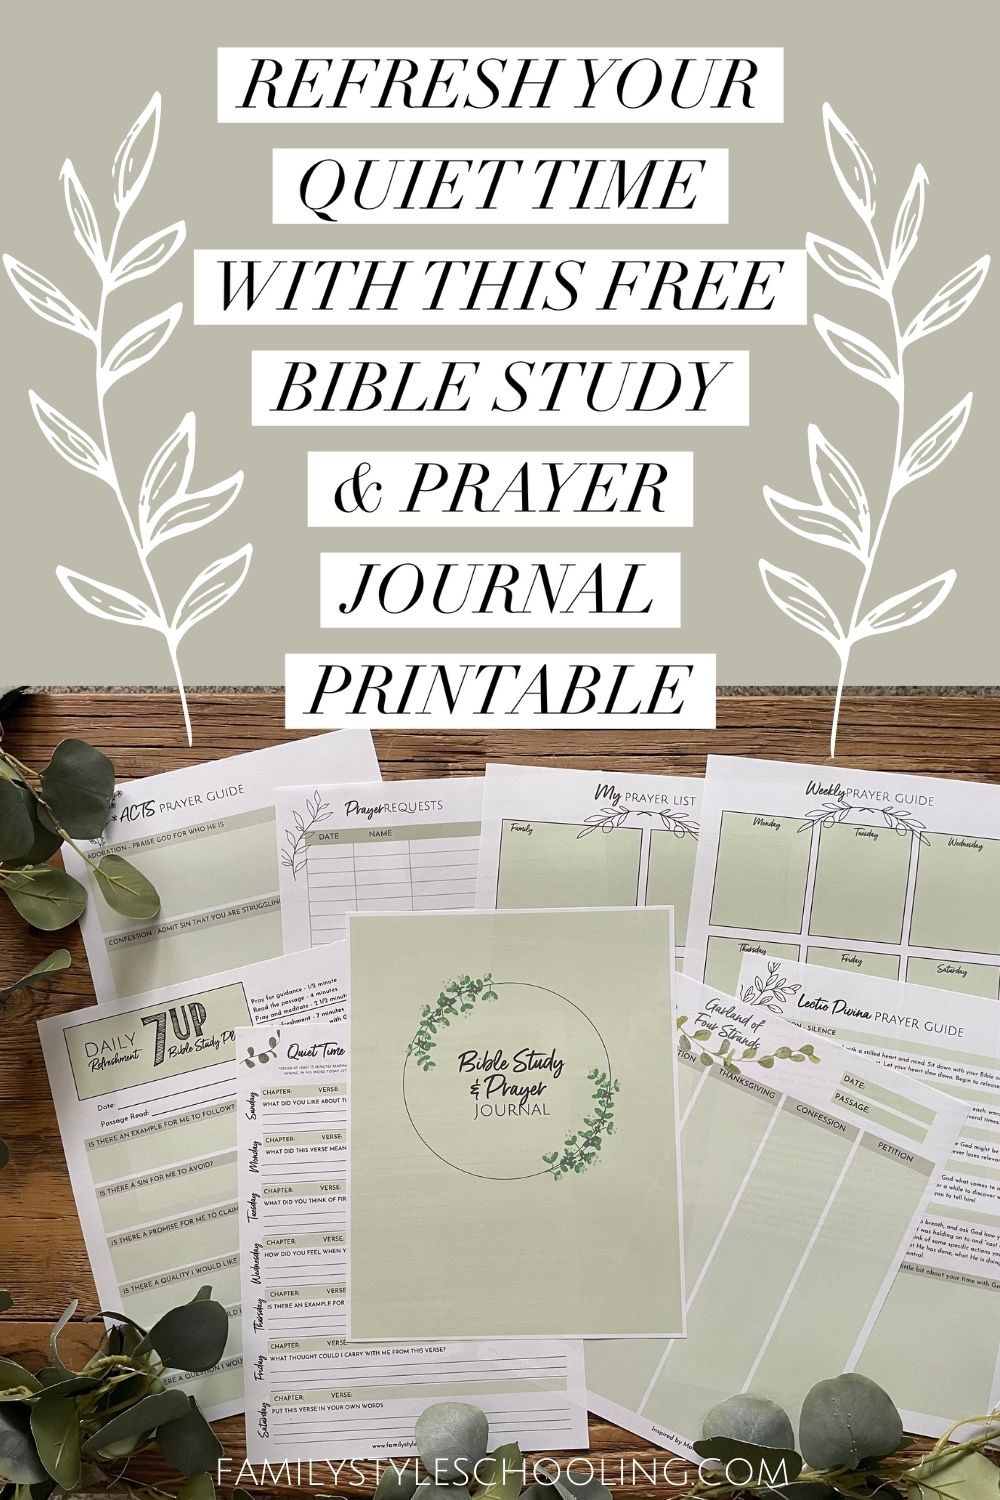 7 Best Images of Printable Prayer Journal Template - Free Prayer